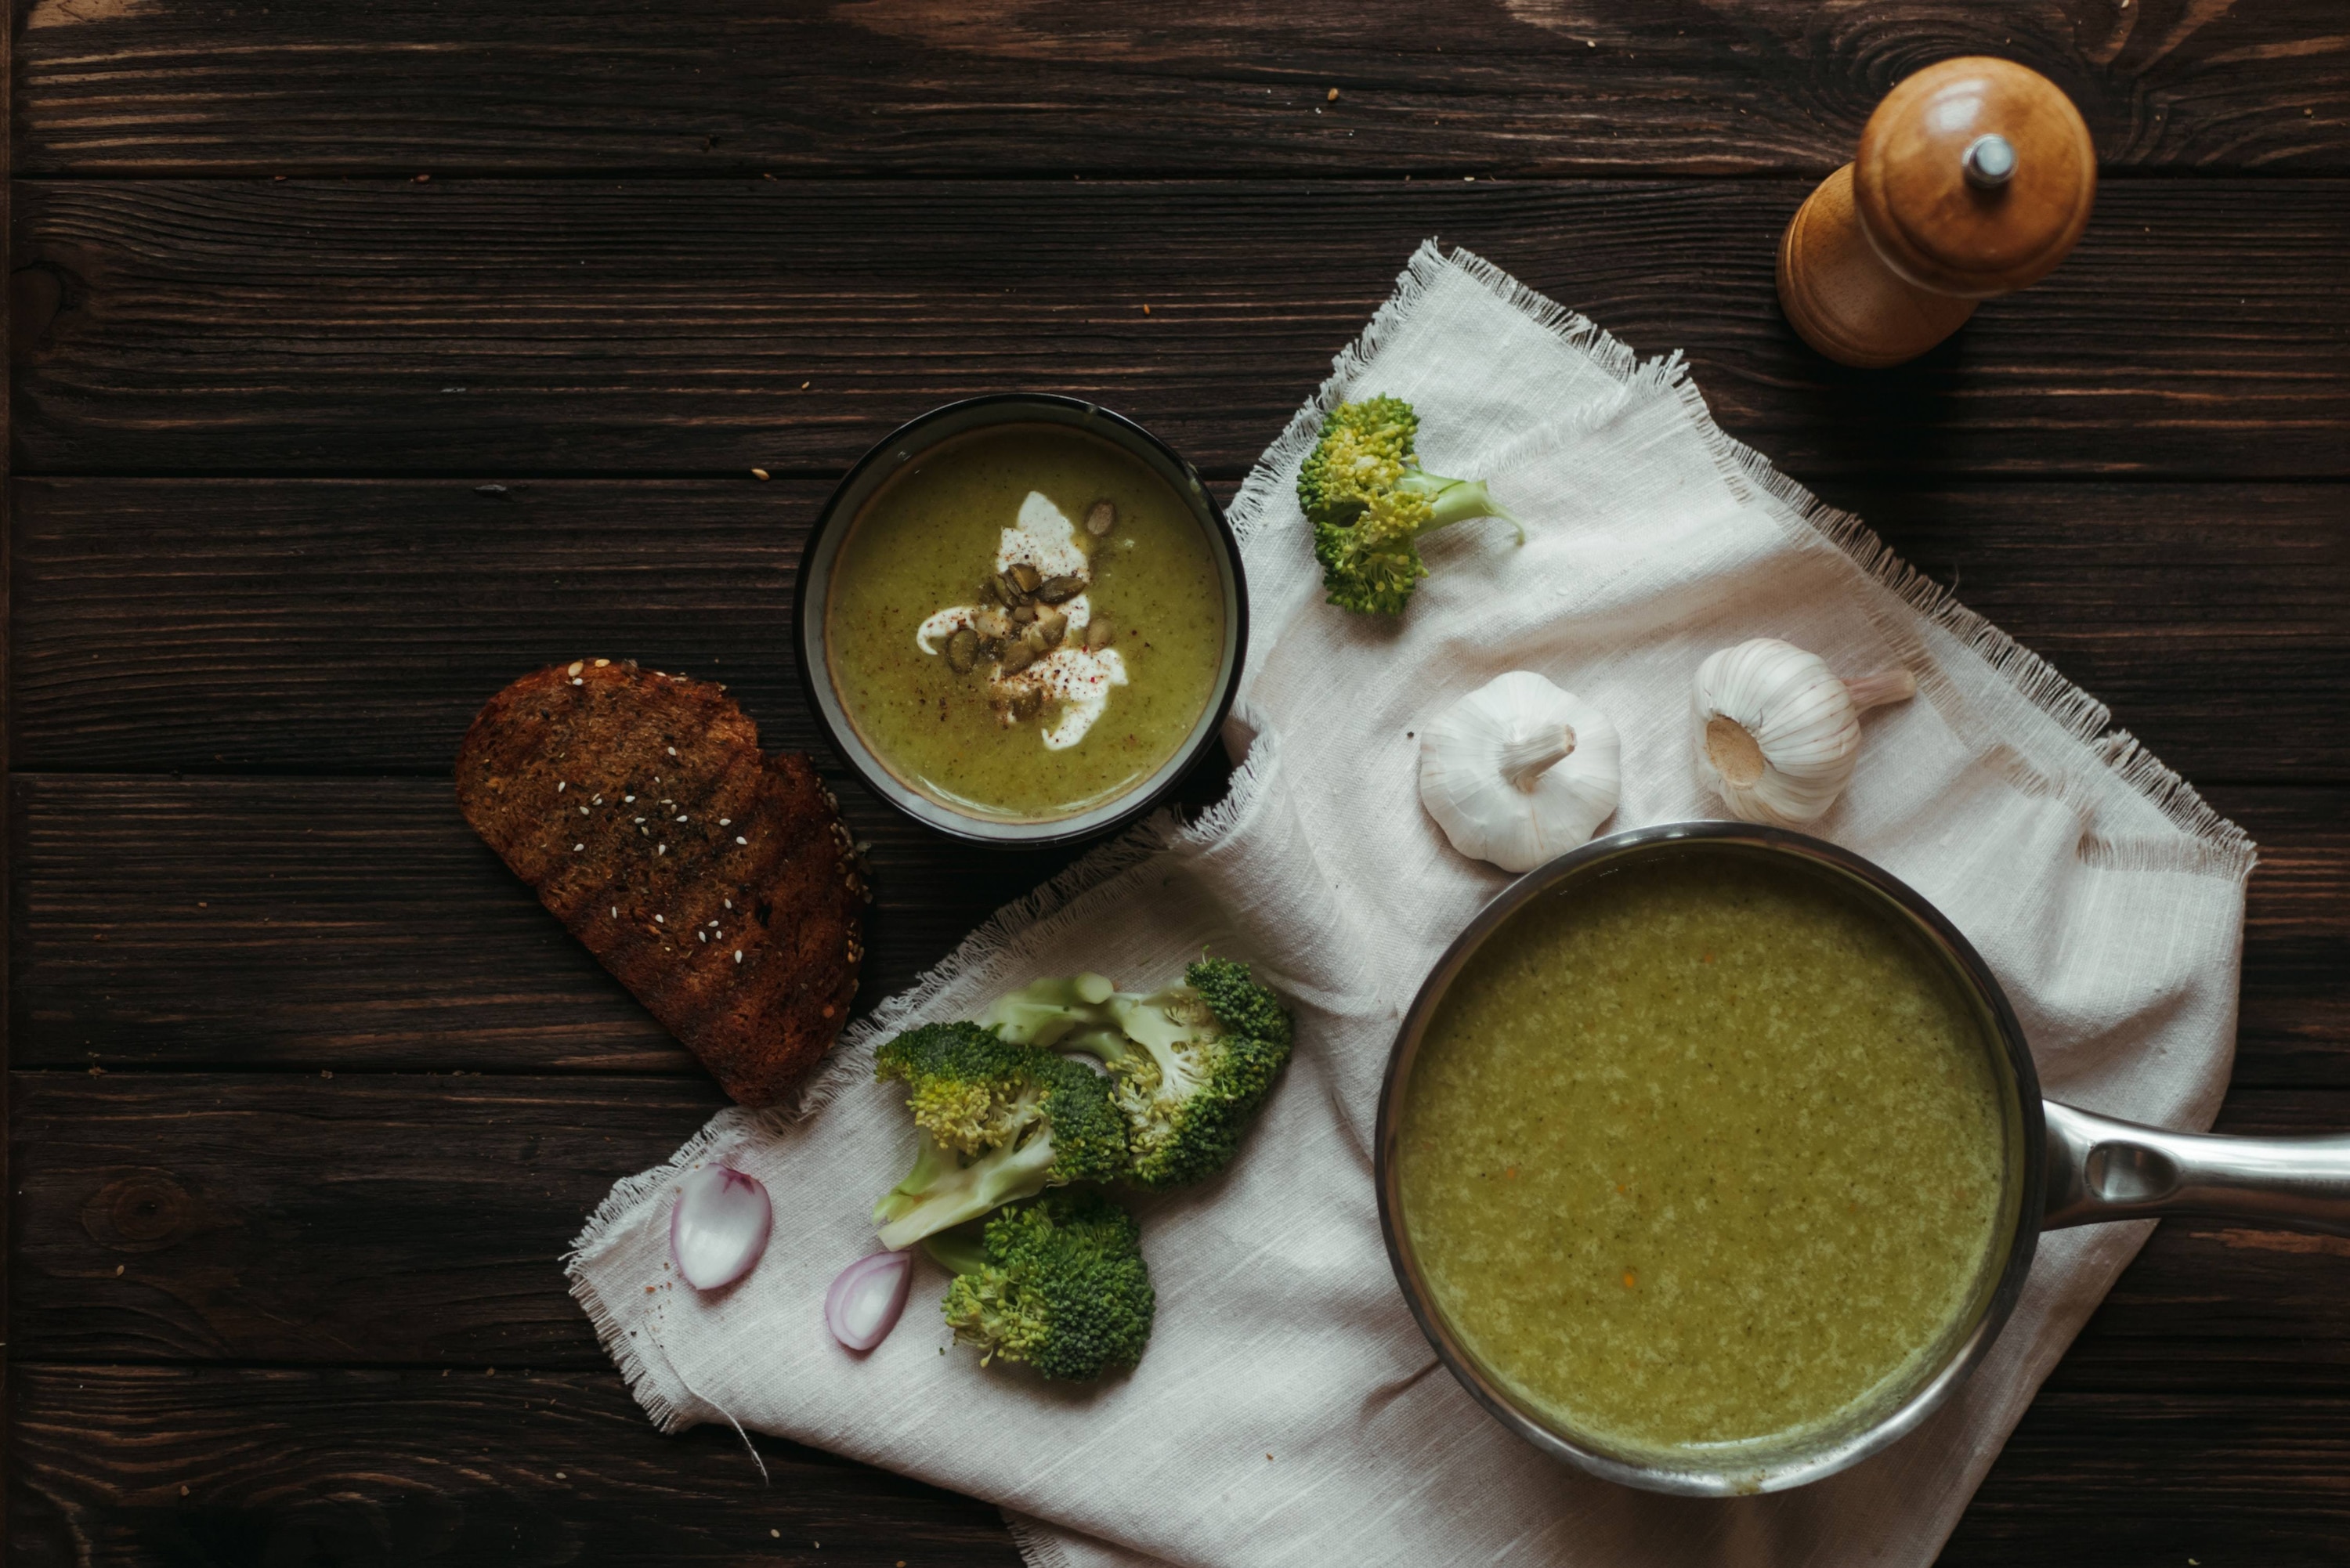 Make This Creamy Broccoli Cheddar Soup With Hidden Veggies!